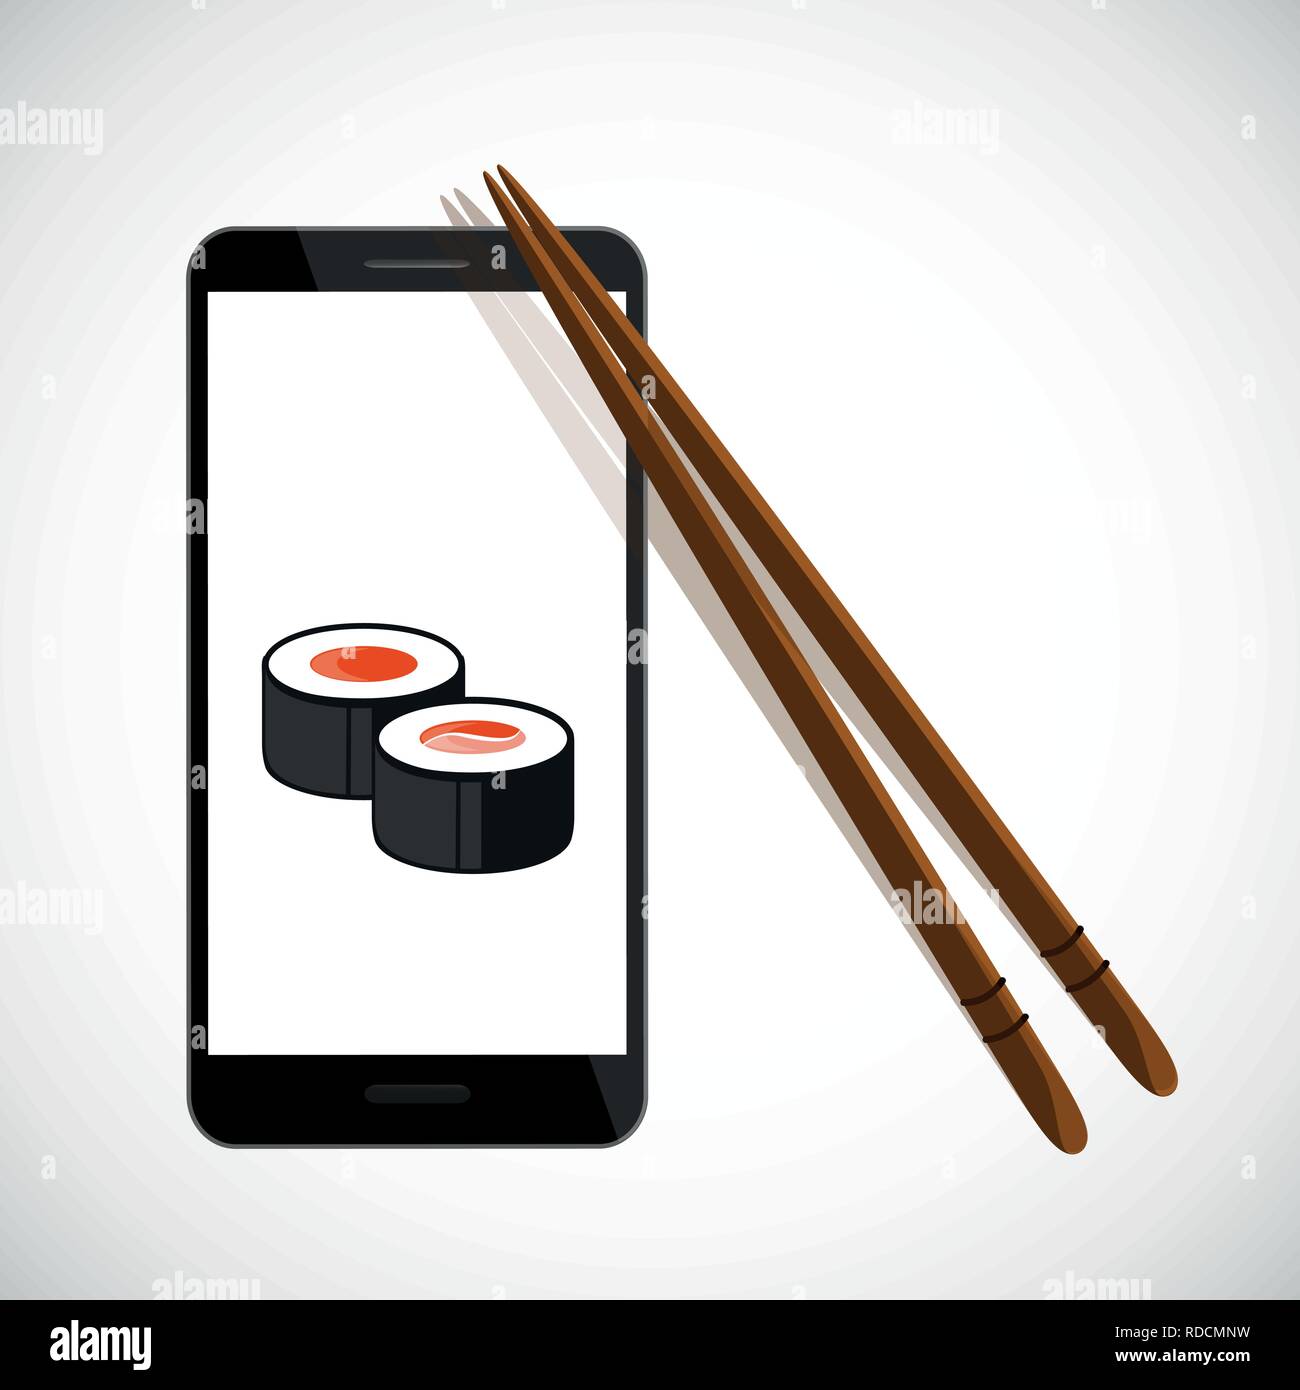 sushi online inside a black smartphone vector illustration EPS10 Stock Vector